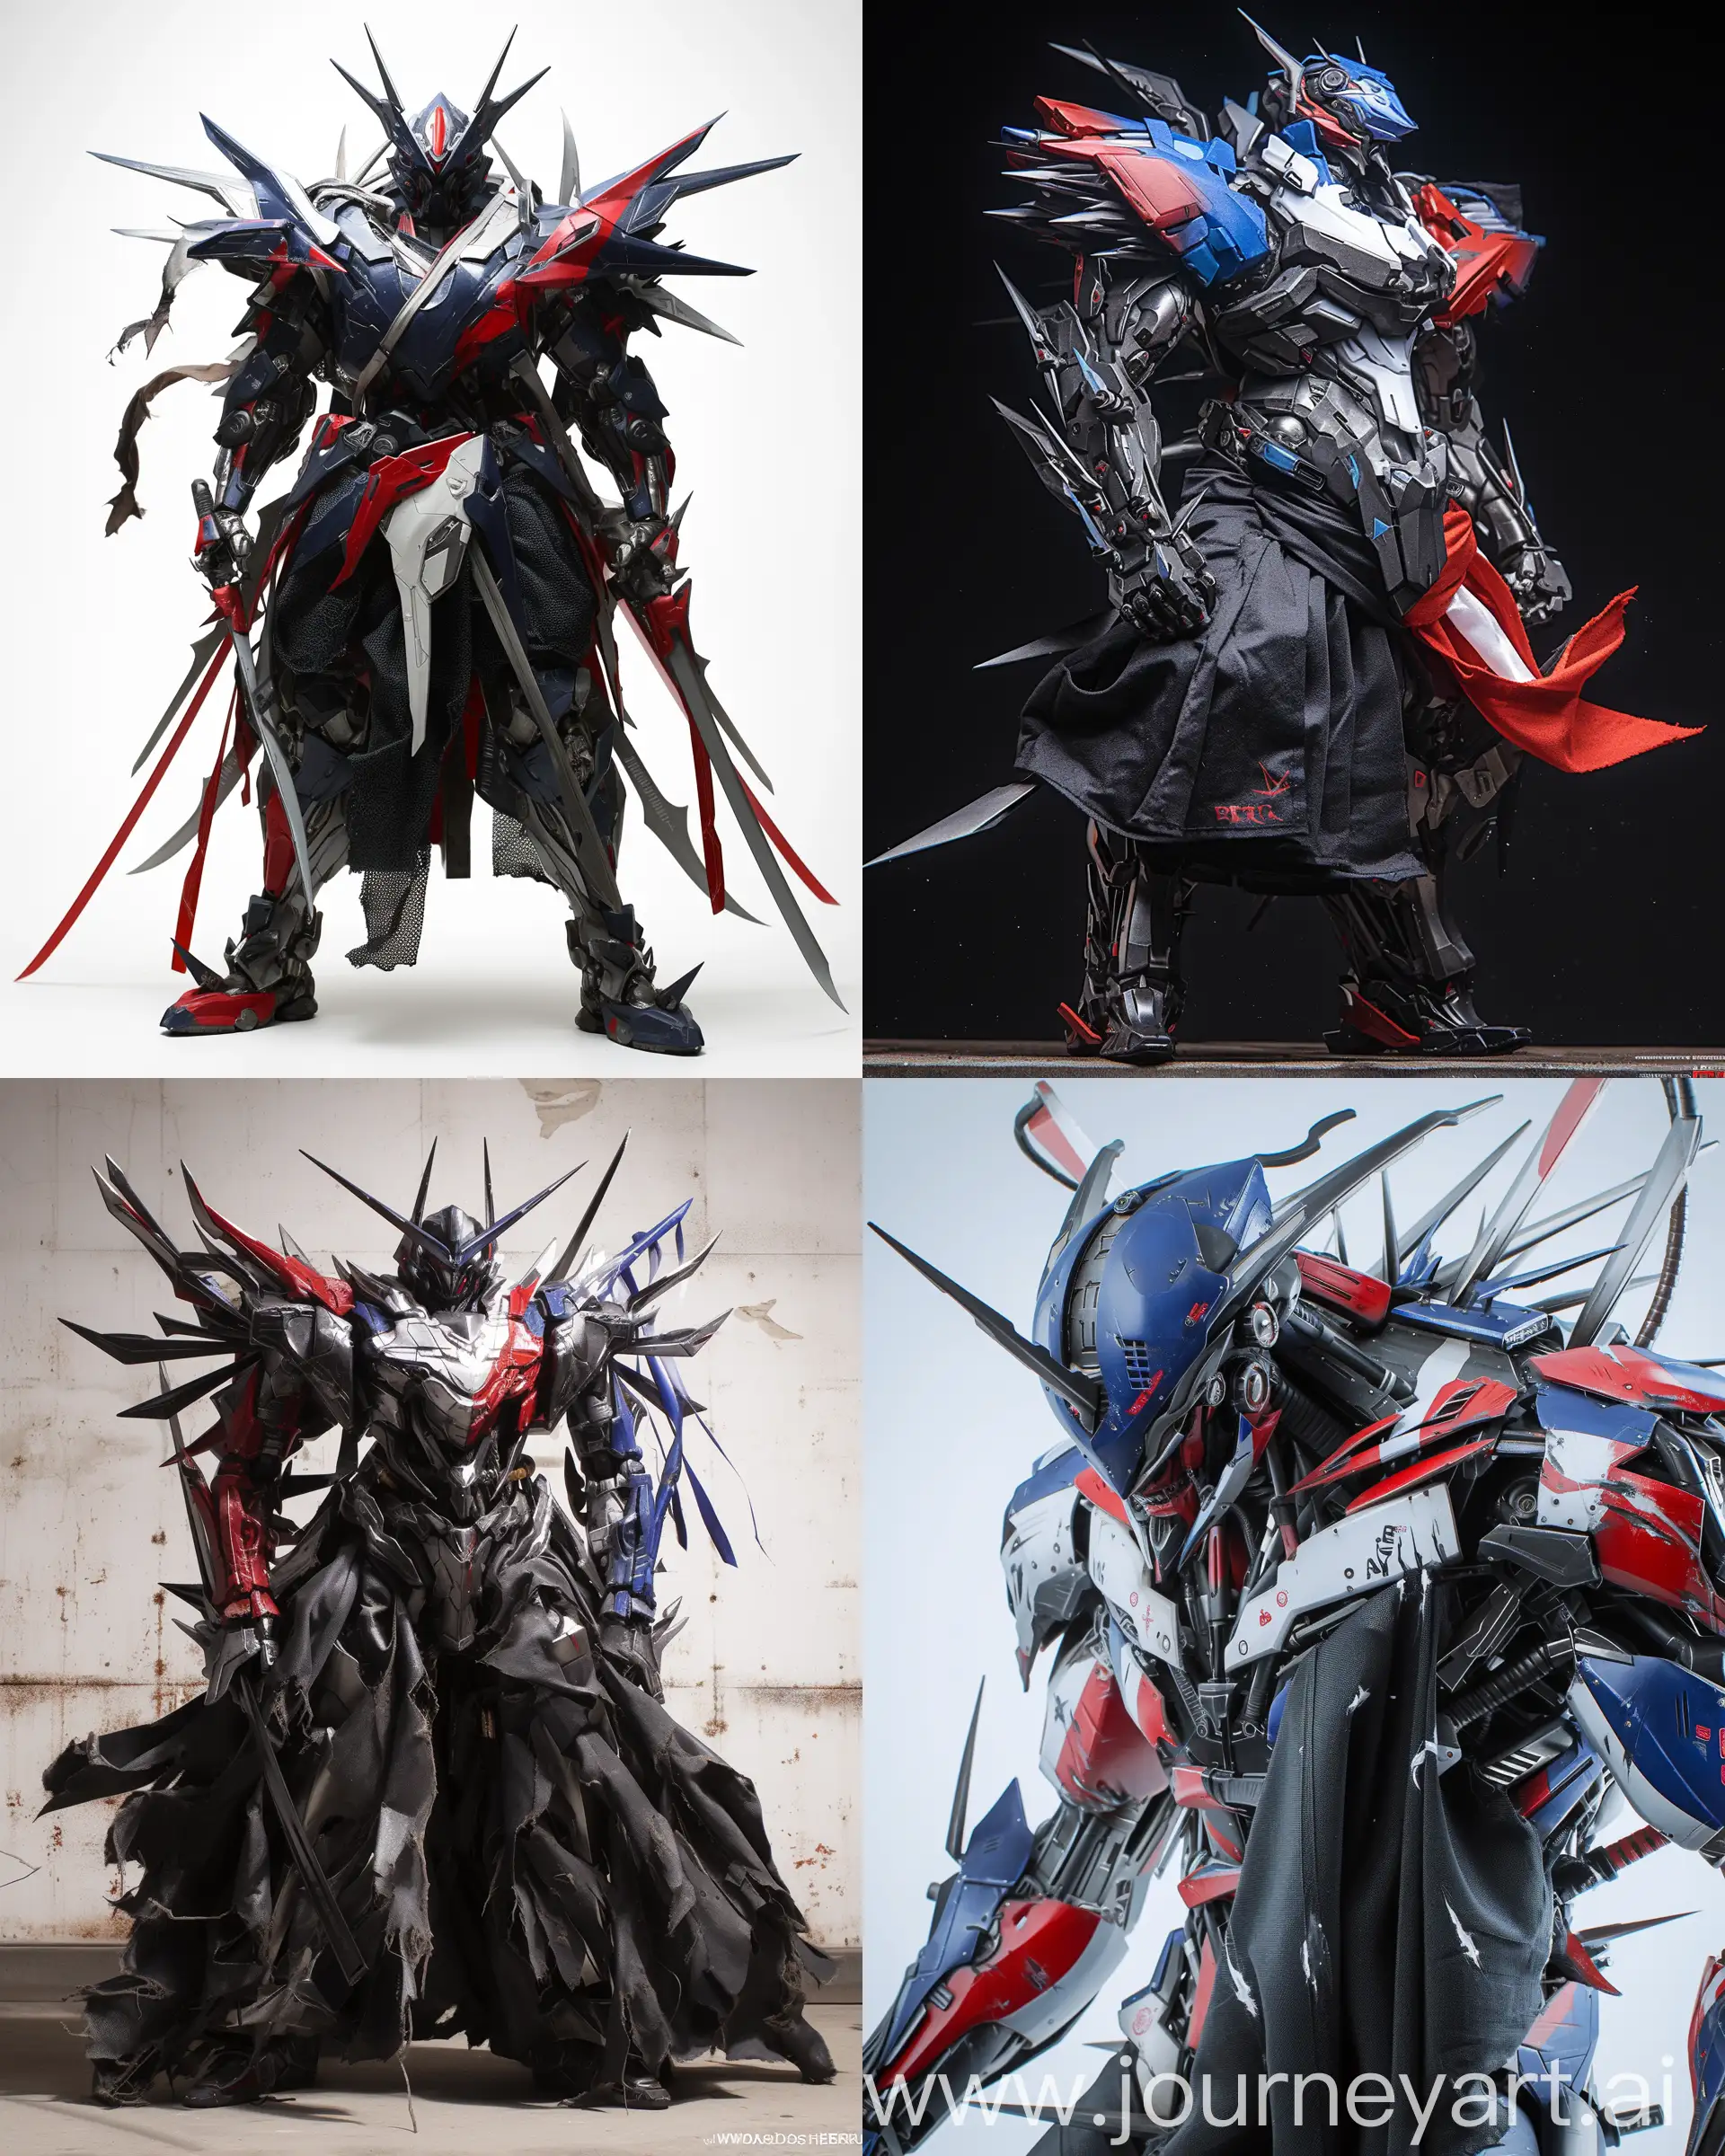 Futuristic-Samurai-Mecha-Warrior-in-Red-White-and-Blue-Steel-Blades